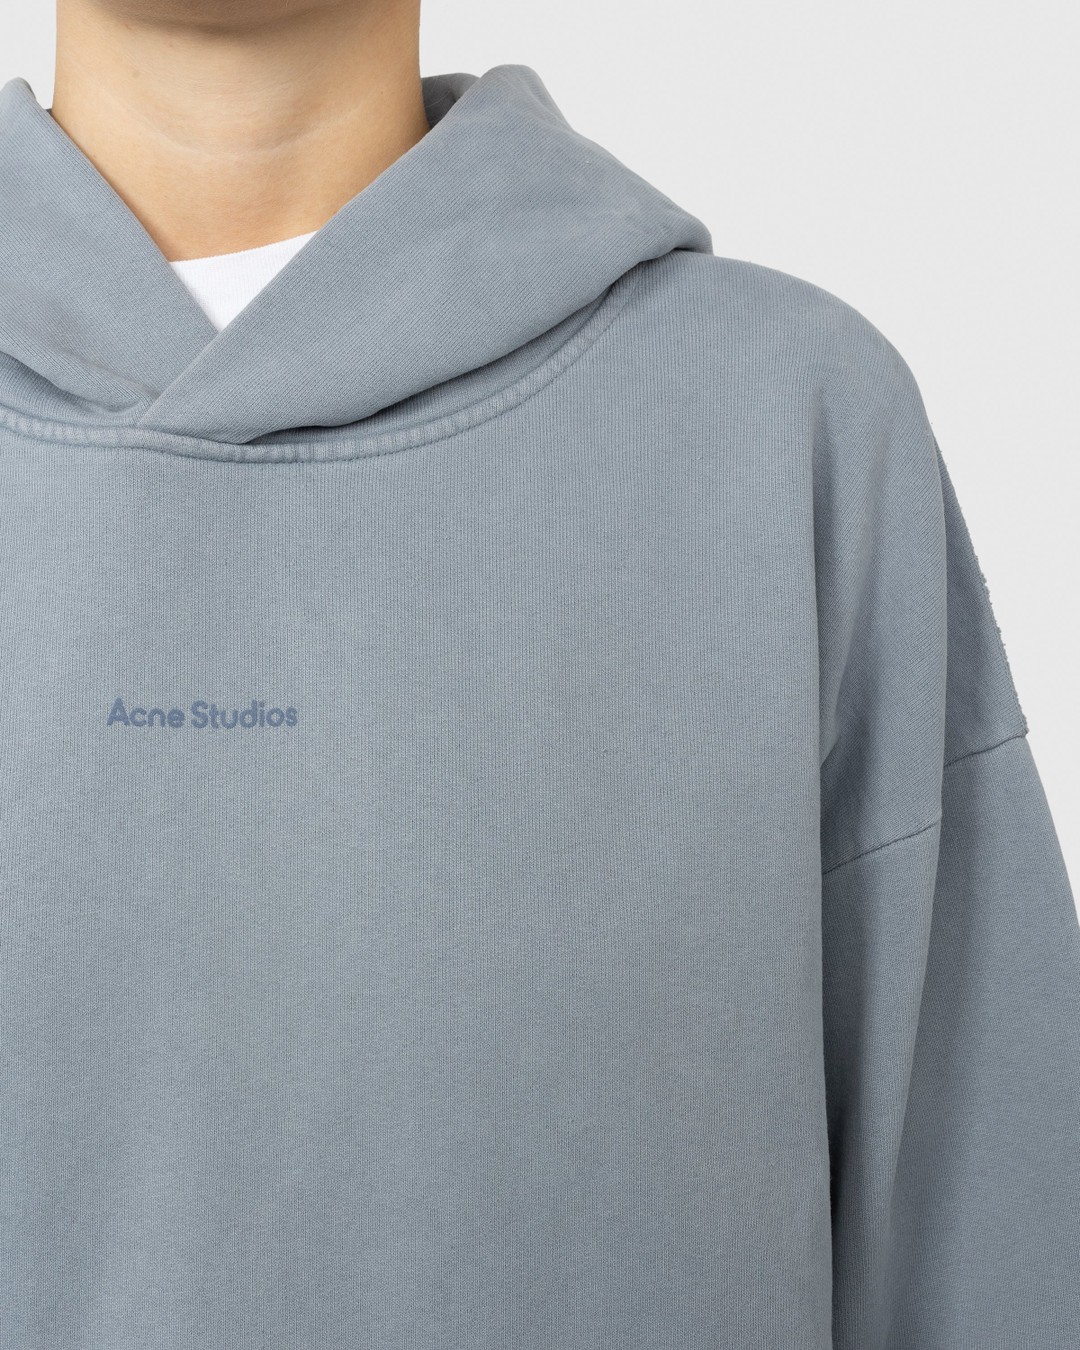 Acne Studios – Organic Cotton Logo Hoodie Steel Grey - Sweats - Grey - Image 5